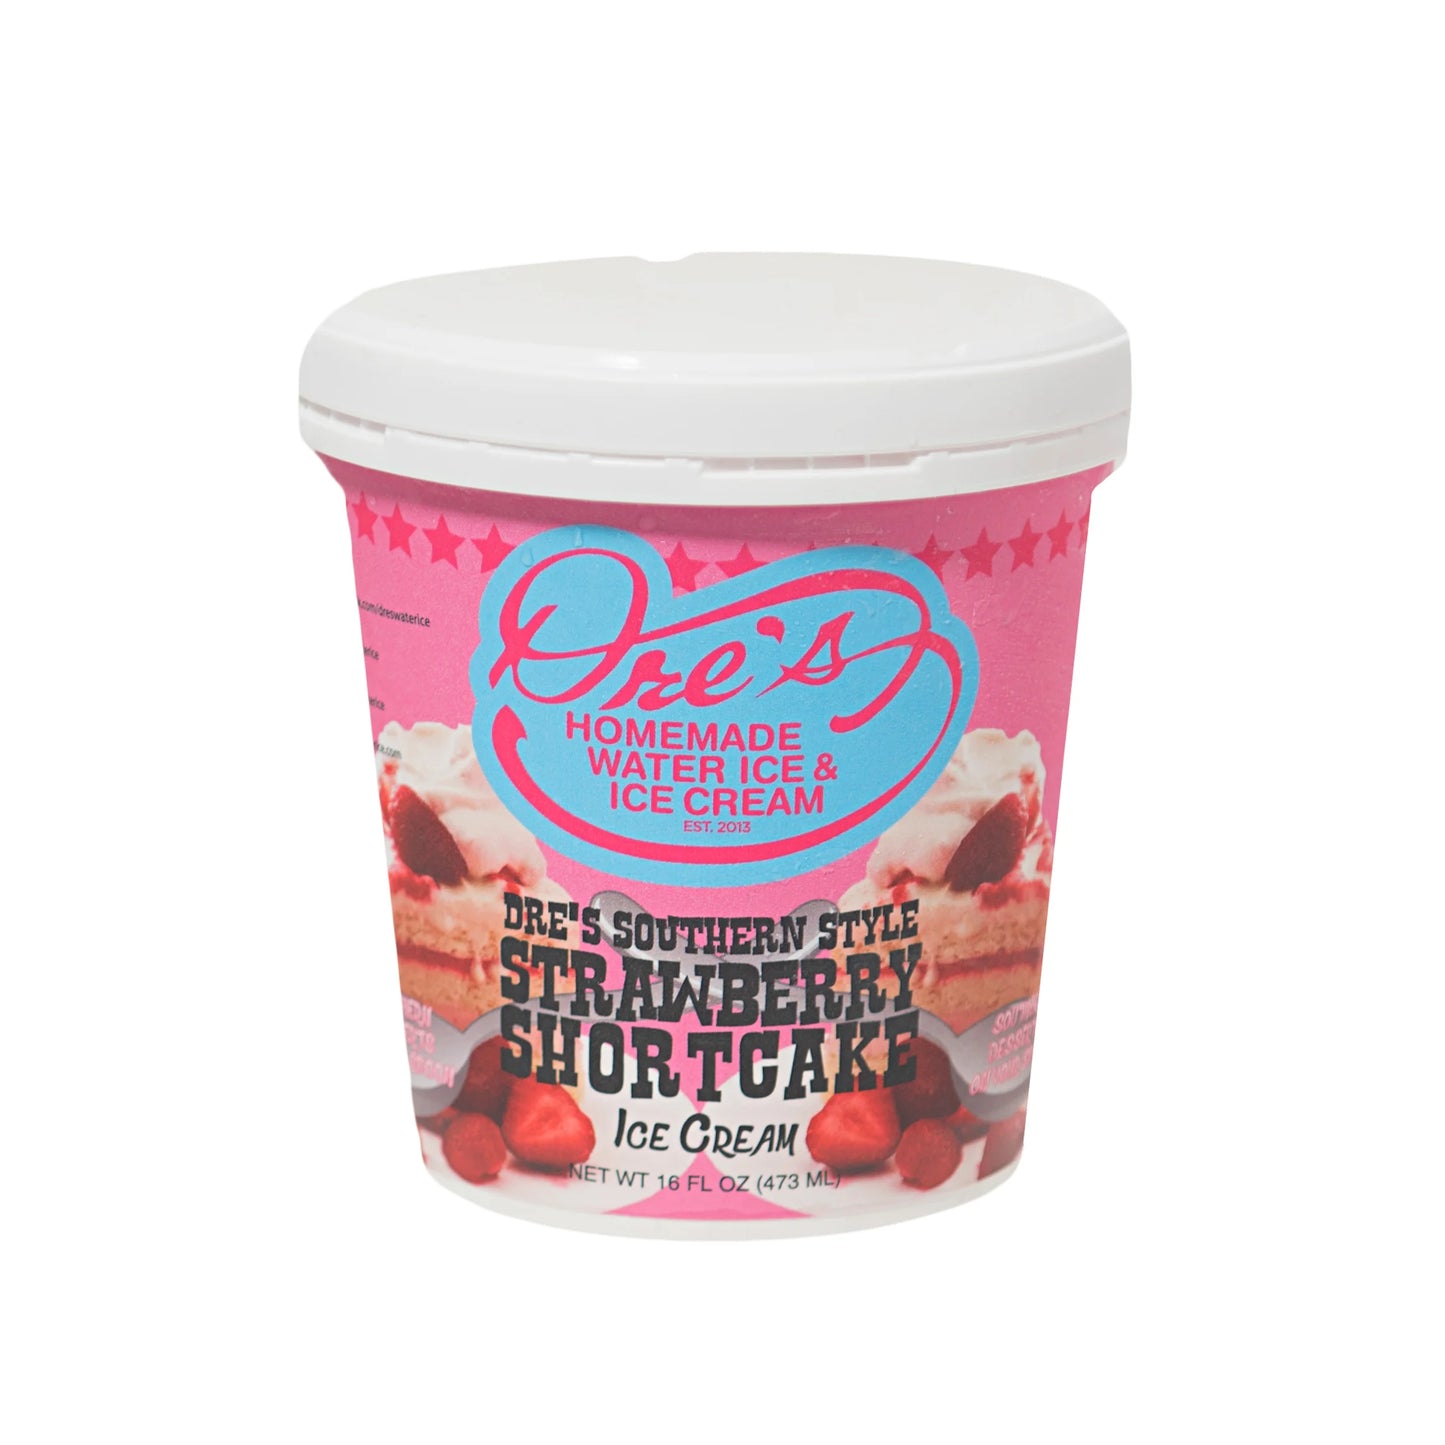 Dre's Southern Style Strawberry Shortcake Ice Cream